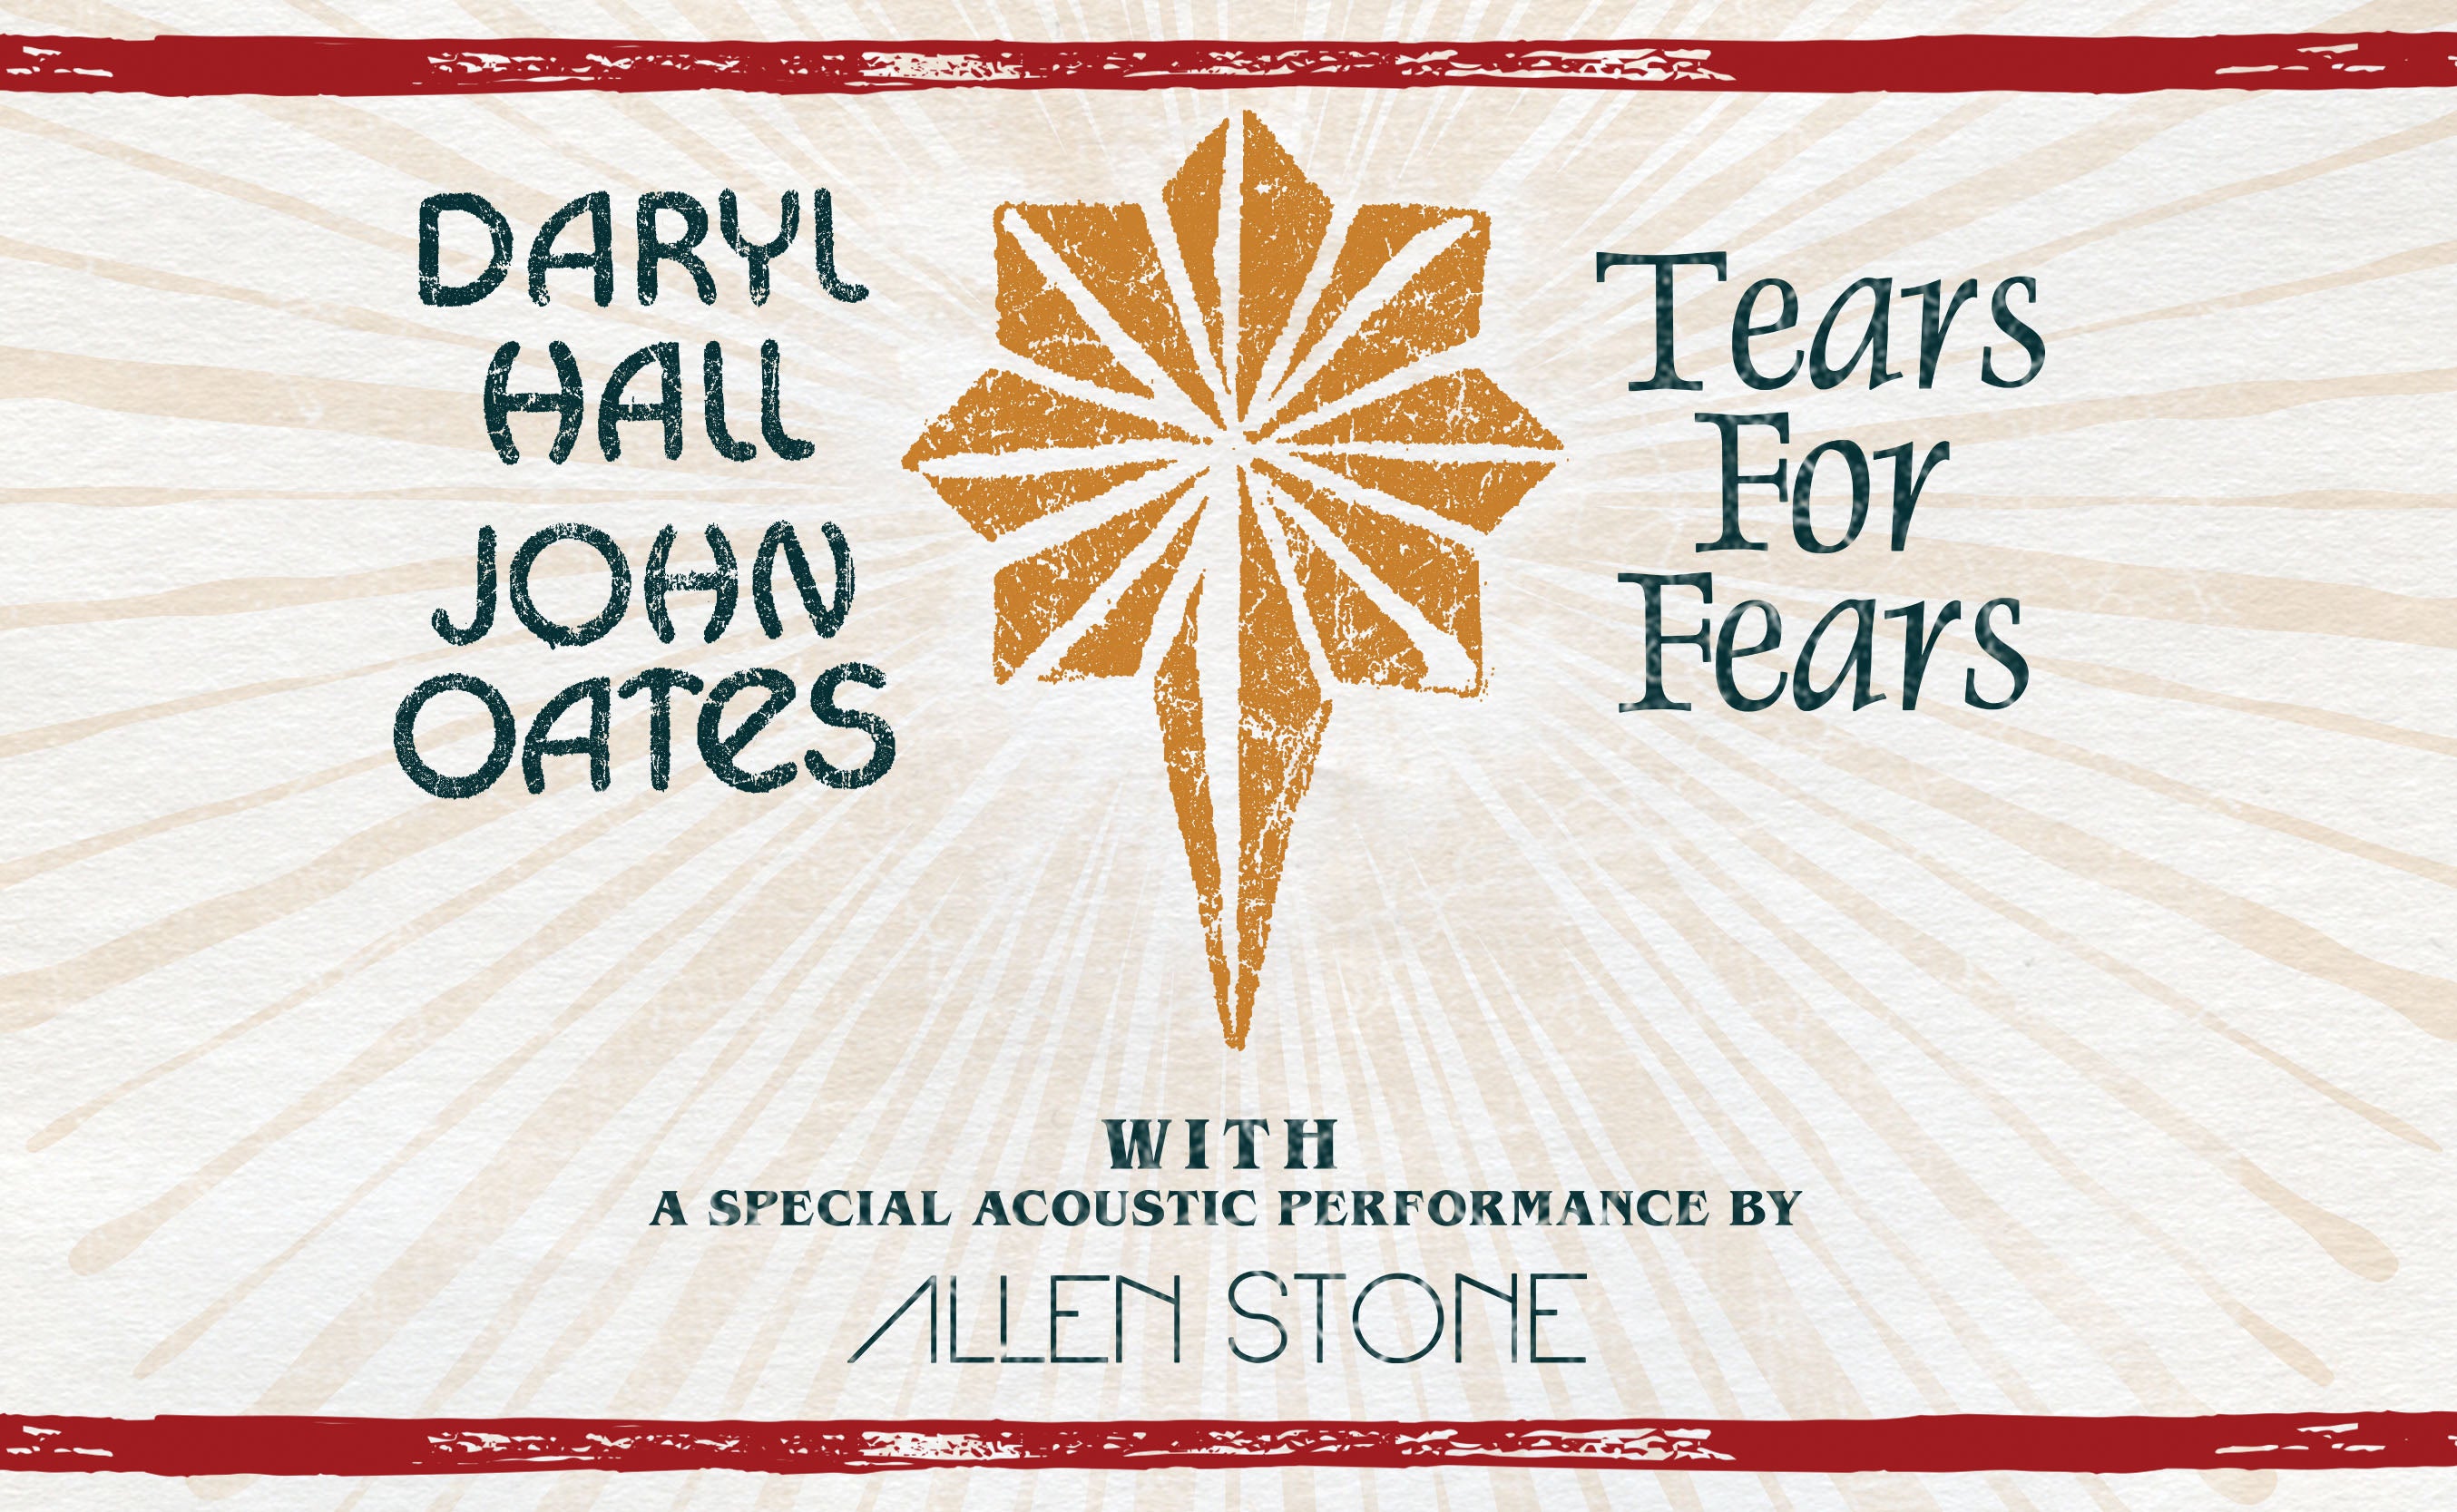 Daryl Hall & John Oates and Tears For Fears